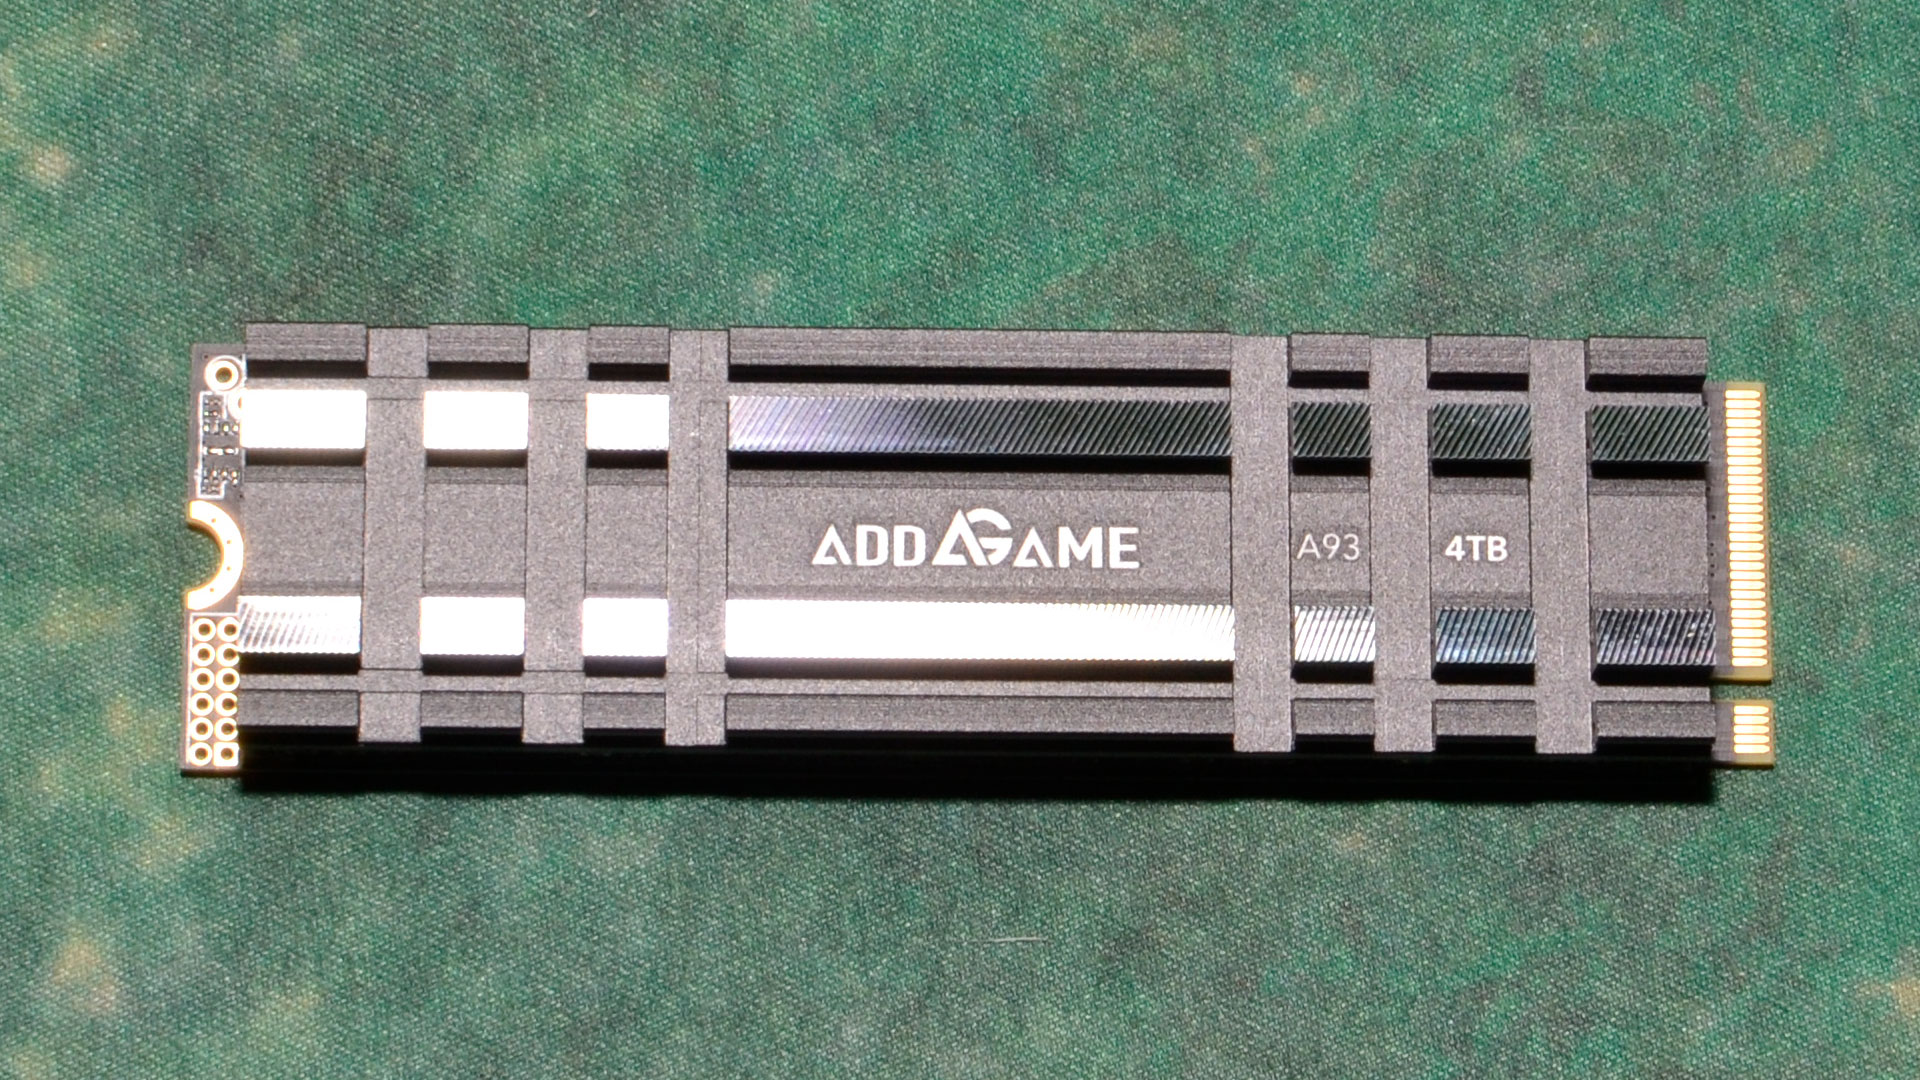 Addlink A93 SSD